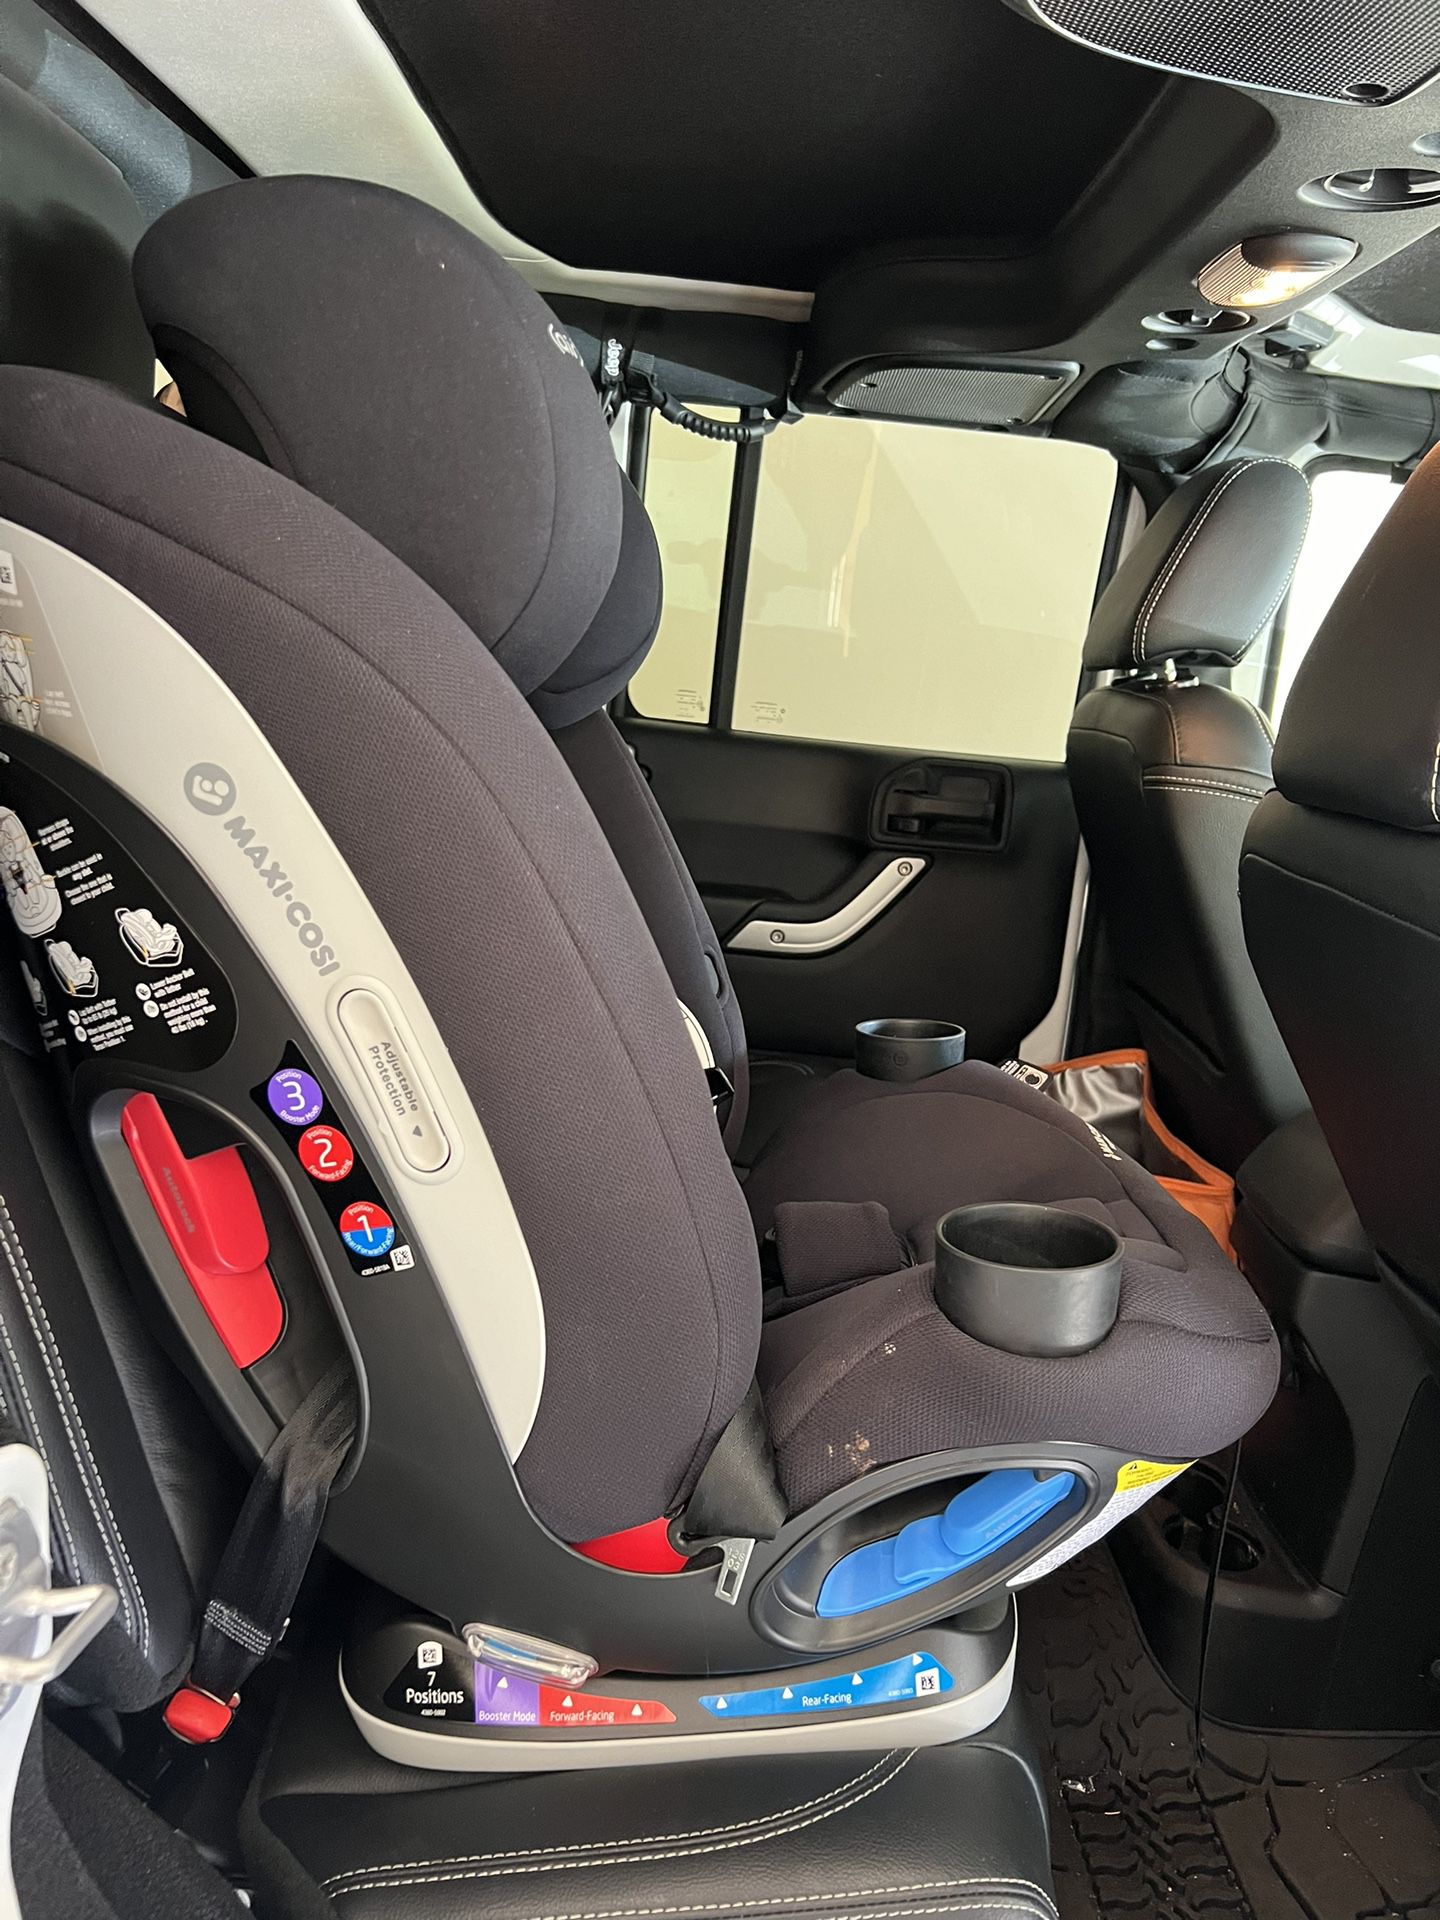 Used maxi-cosi car seat All In One 